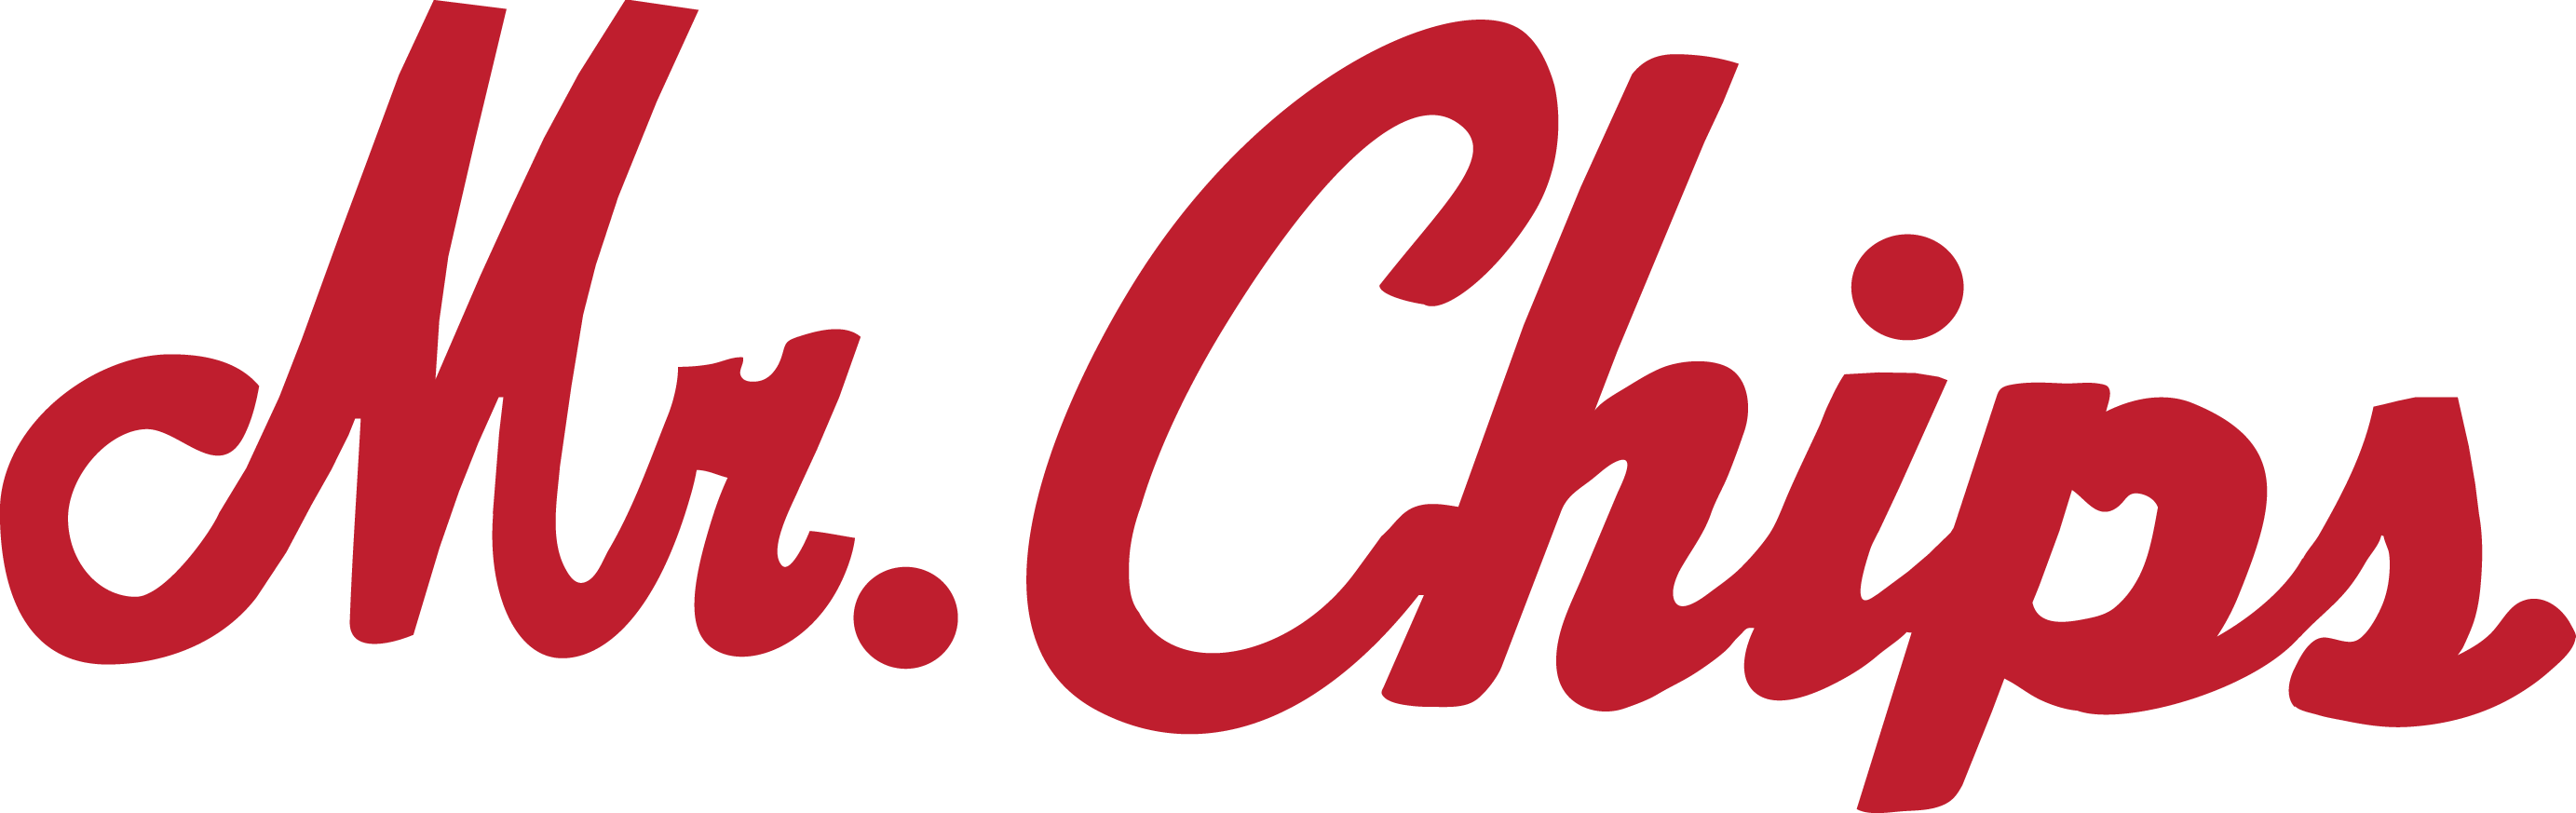 File:Logo Chio.svg - Wikimedia Commons